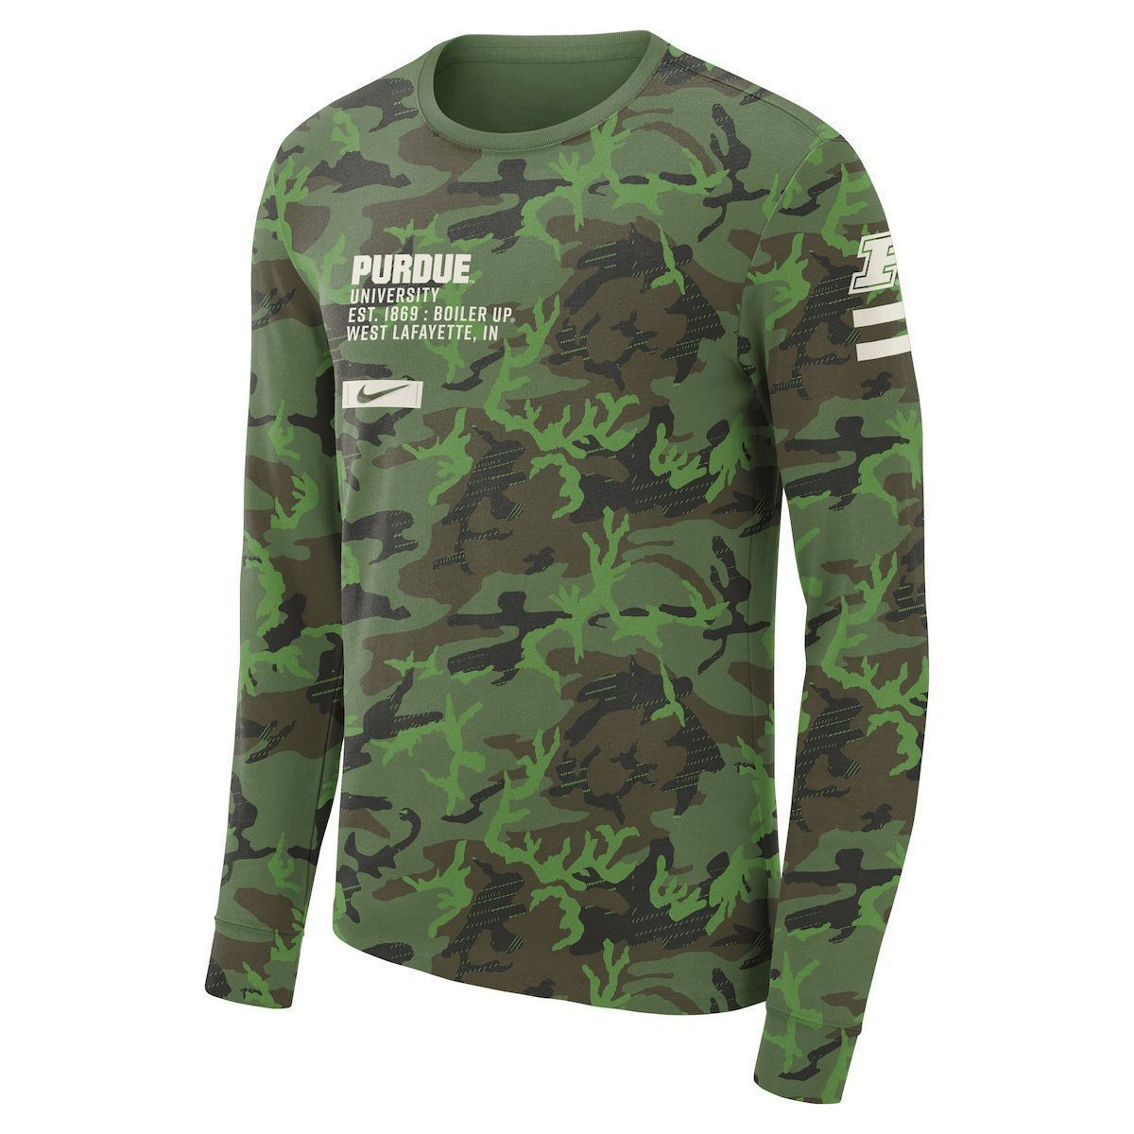 Nike Men's Camo Purdue Boilermakers Military Long Sleeve T-Shirt - Image 3 of 4